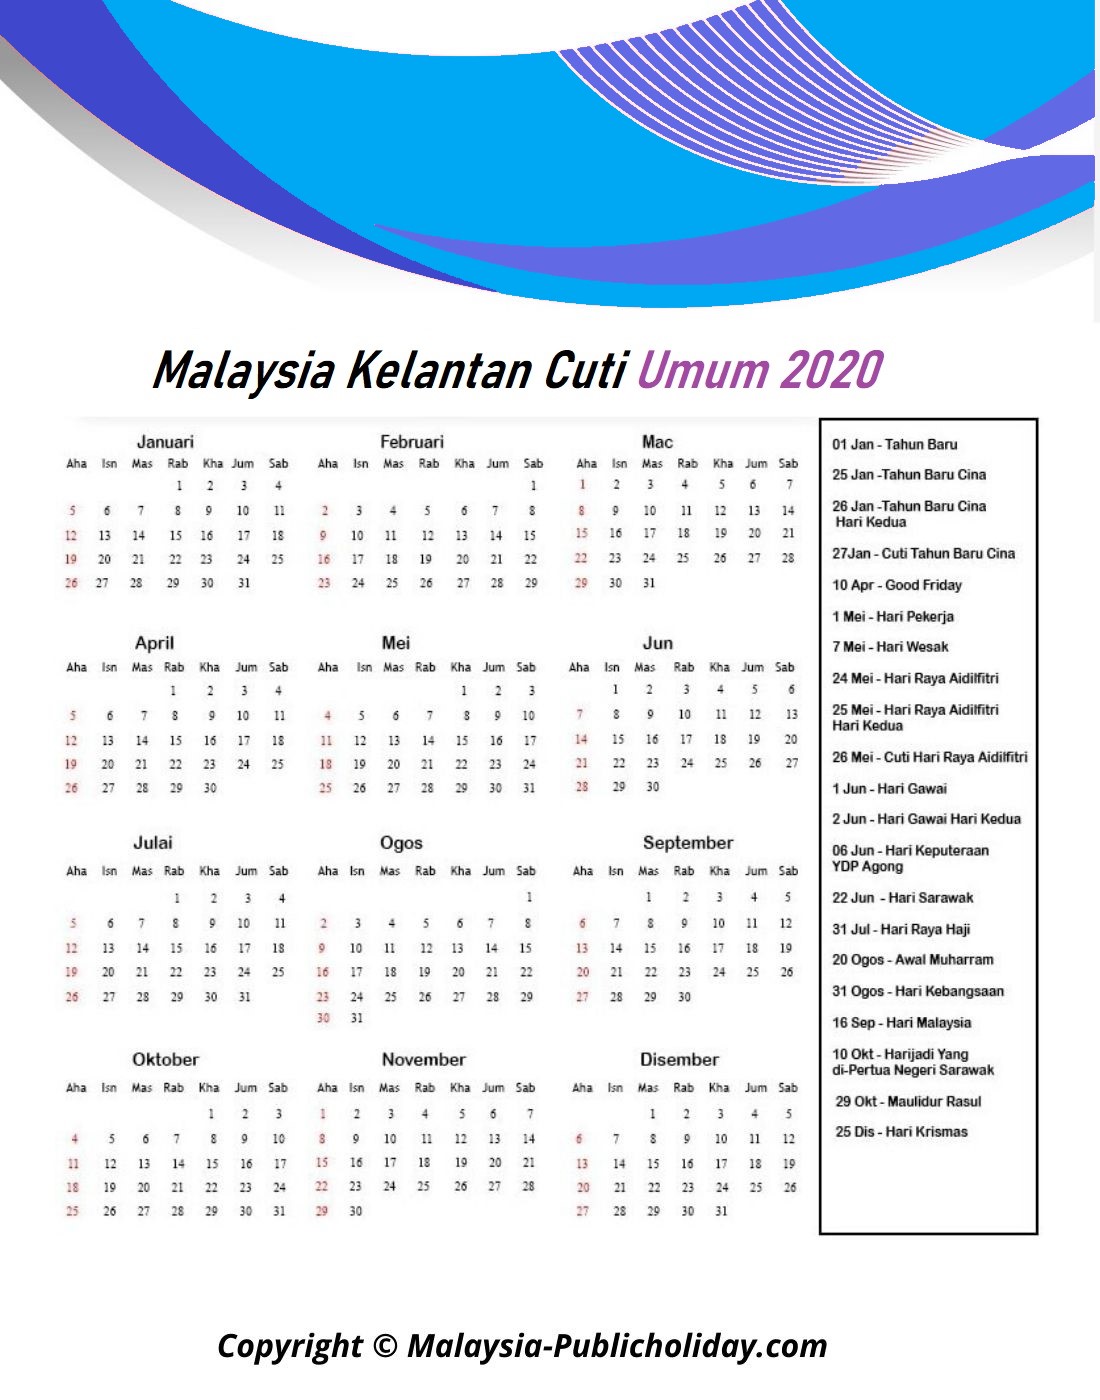 Kalendar Kelantan 2020 Malaysia